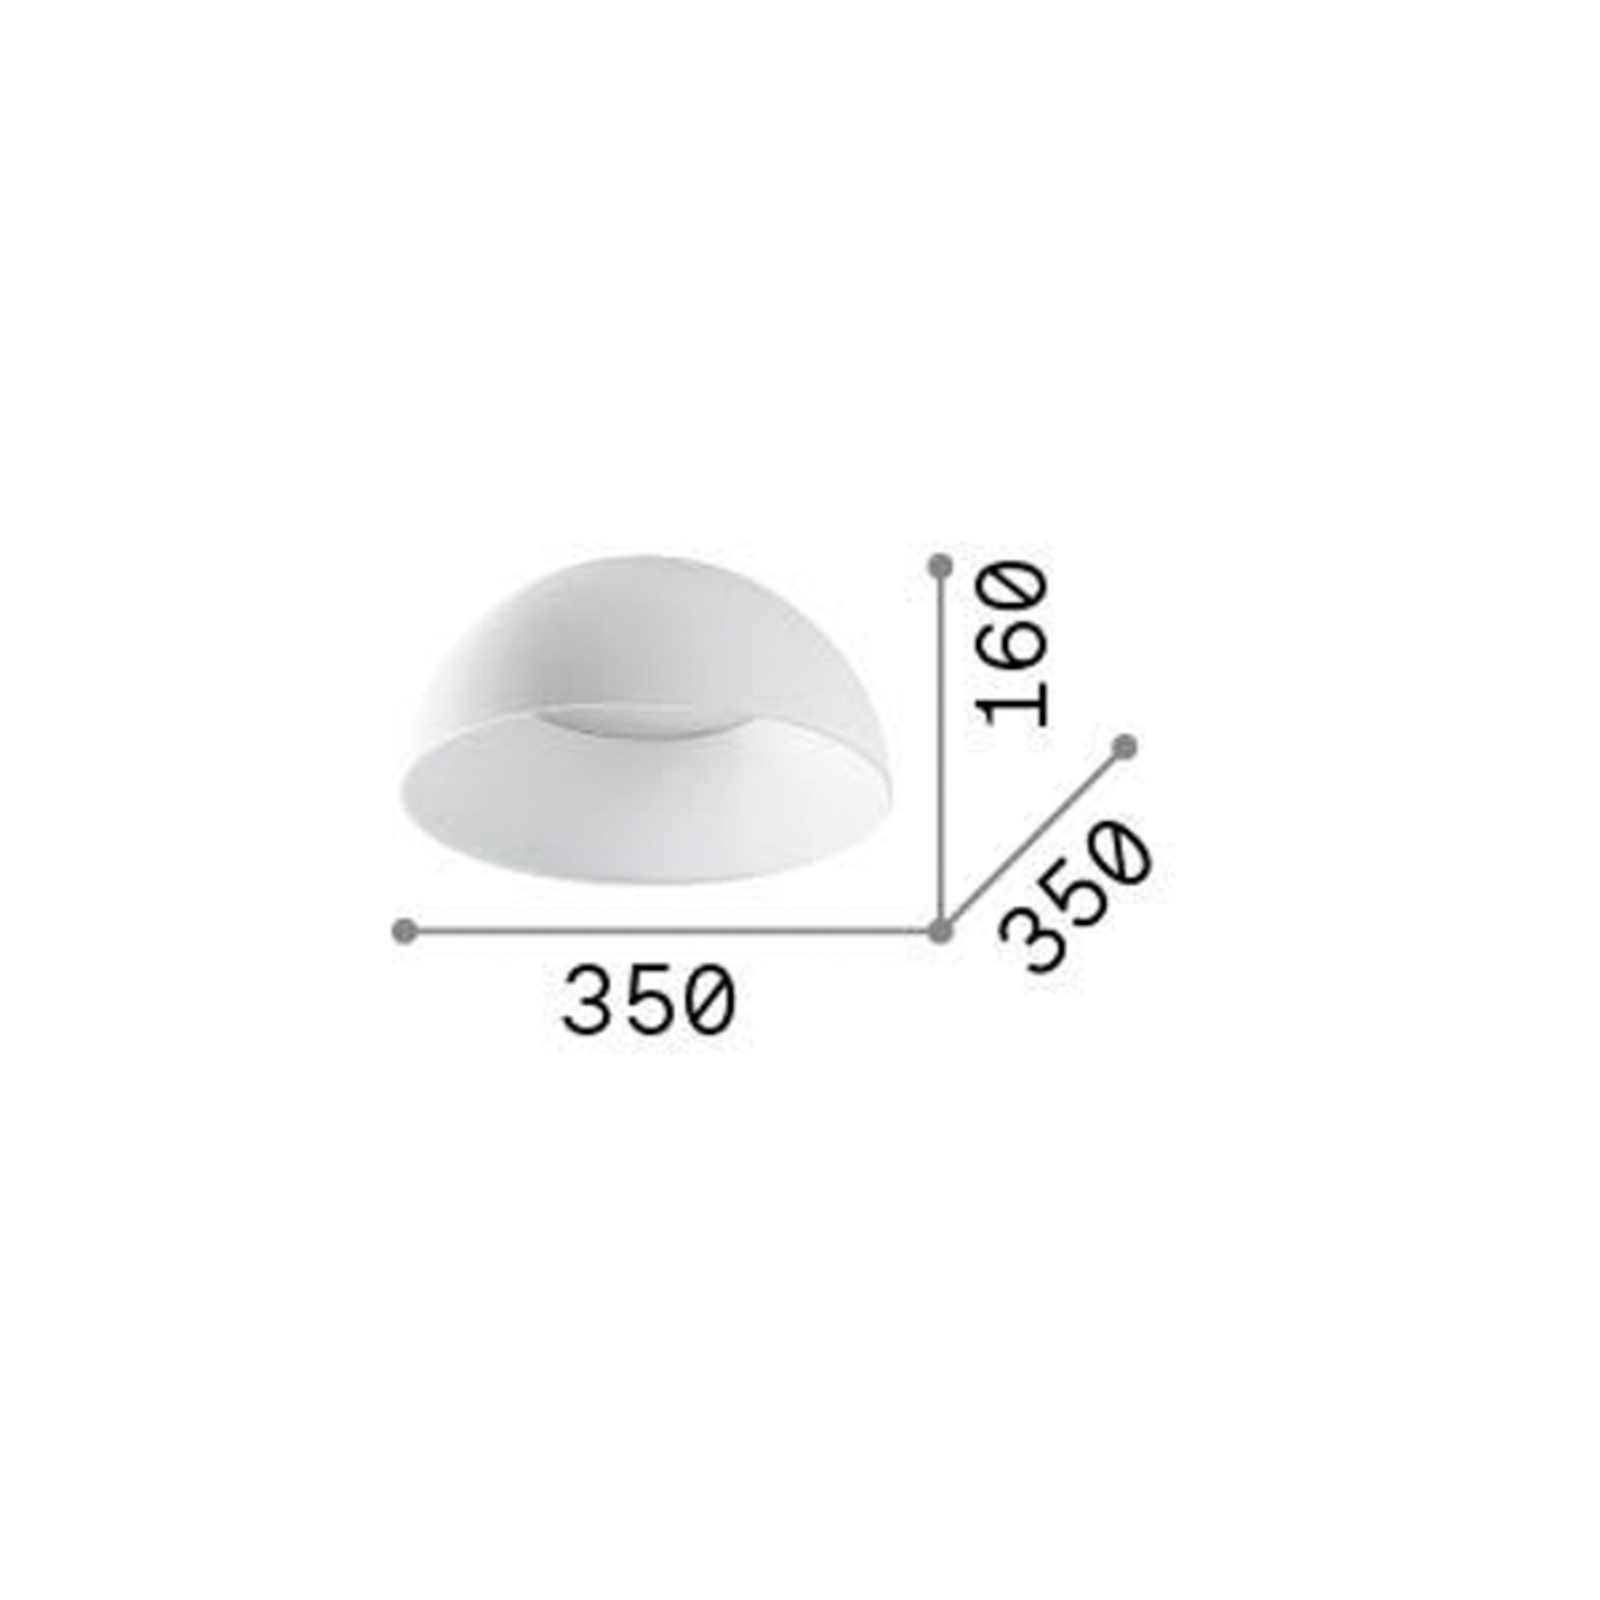 Ideal Lux taklampe Corolla-1, hvit, metall, Ø 35 cm